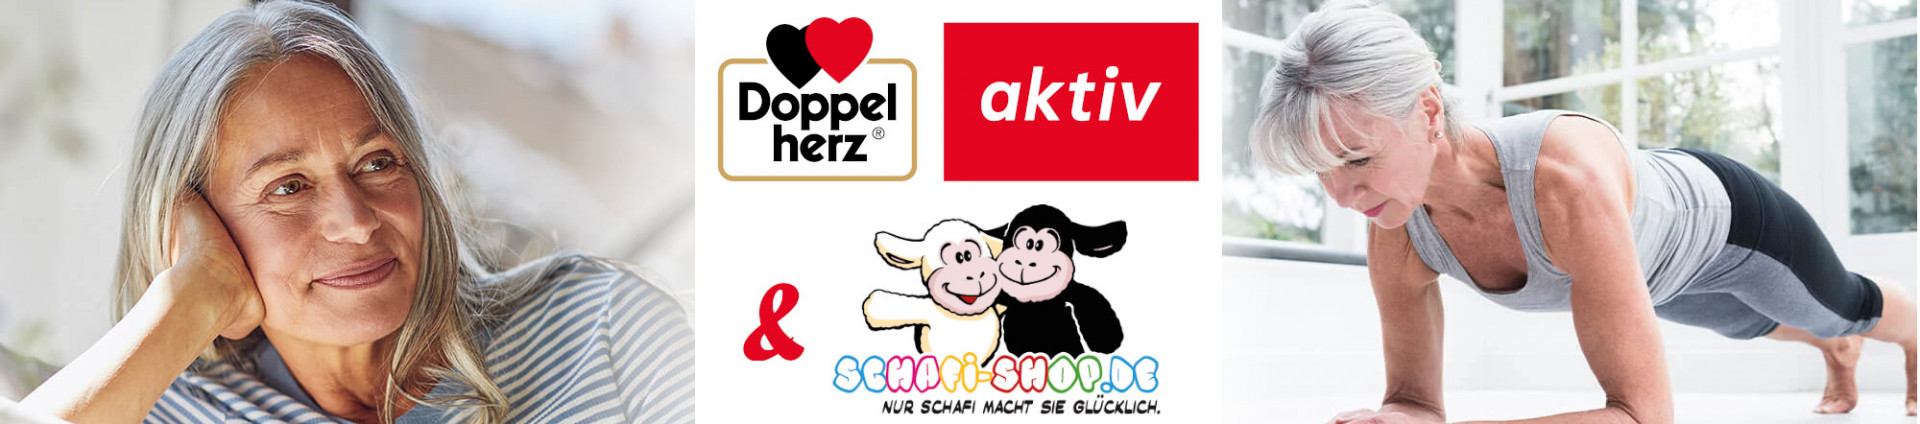 Doppelherz Aktiv的标志和Schafi-Shop的标志与老太太在一起